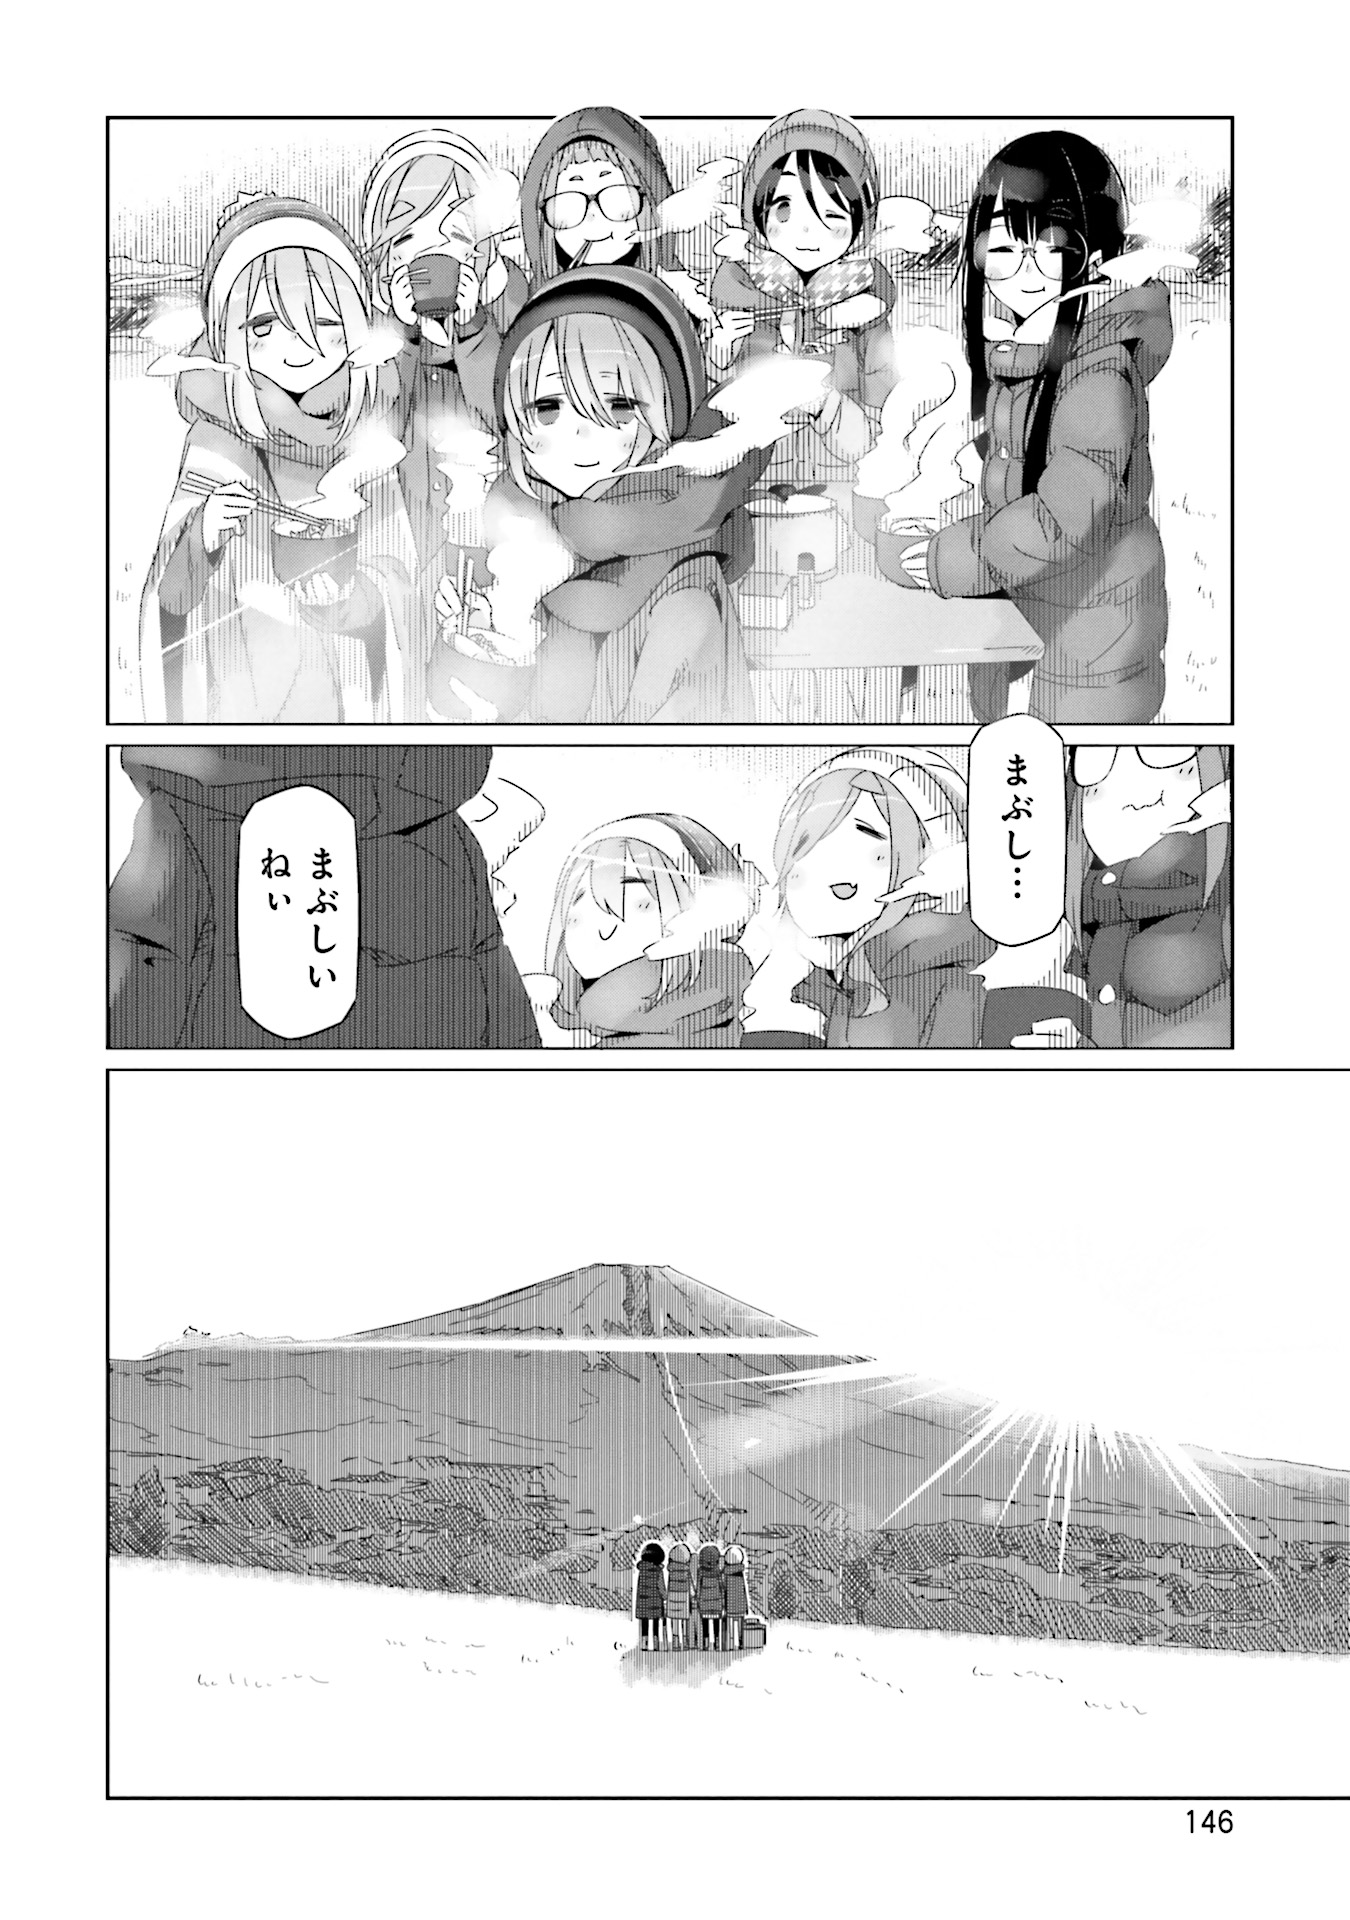 Yuru Camp - Chapter 23 - Page 24